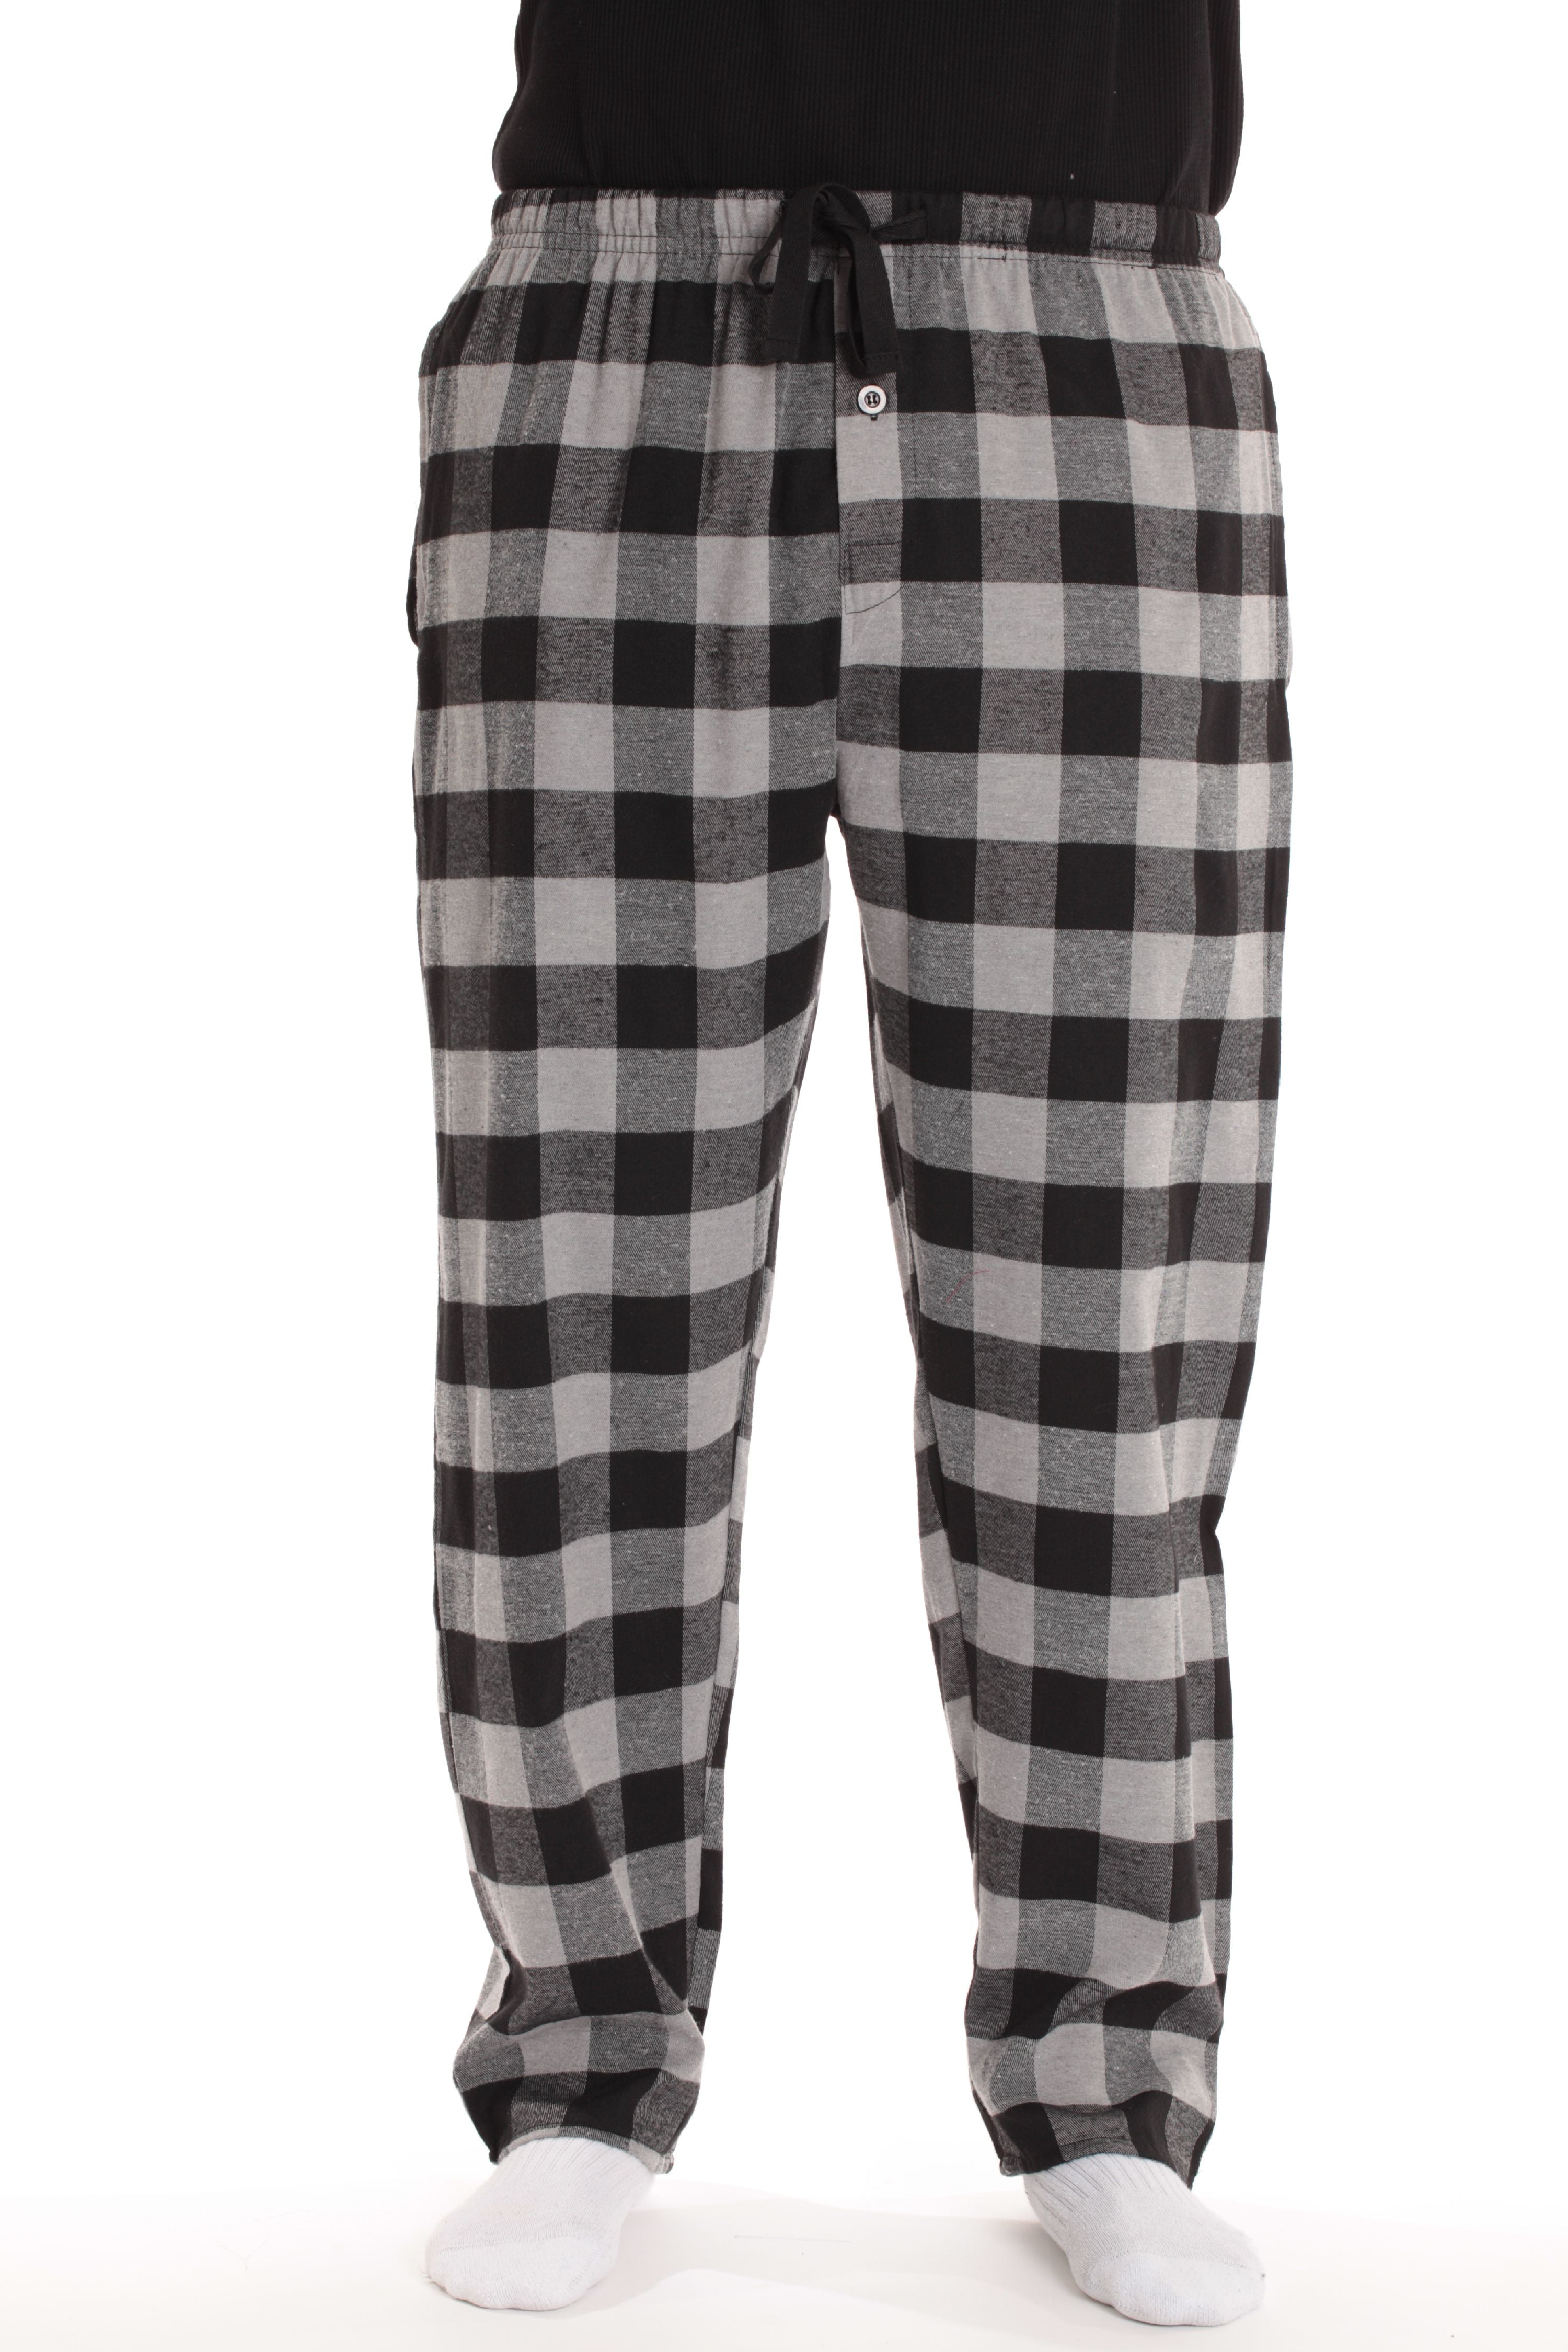 #followme Men's Flannel Pajamas - Plaid Pajama Pants for Men - Lounge &  Sleep PJ Bottoms (Grey - Buffalo Plaid, X-Large)